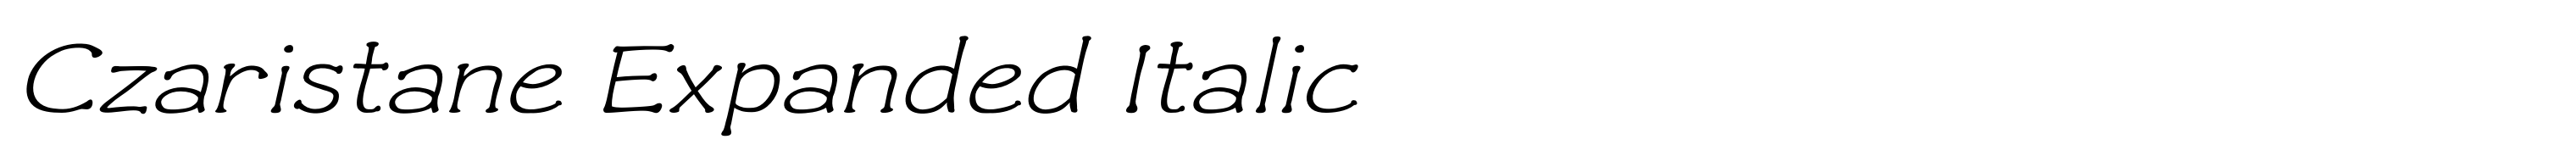 Czaristane Expanded Italic